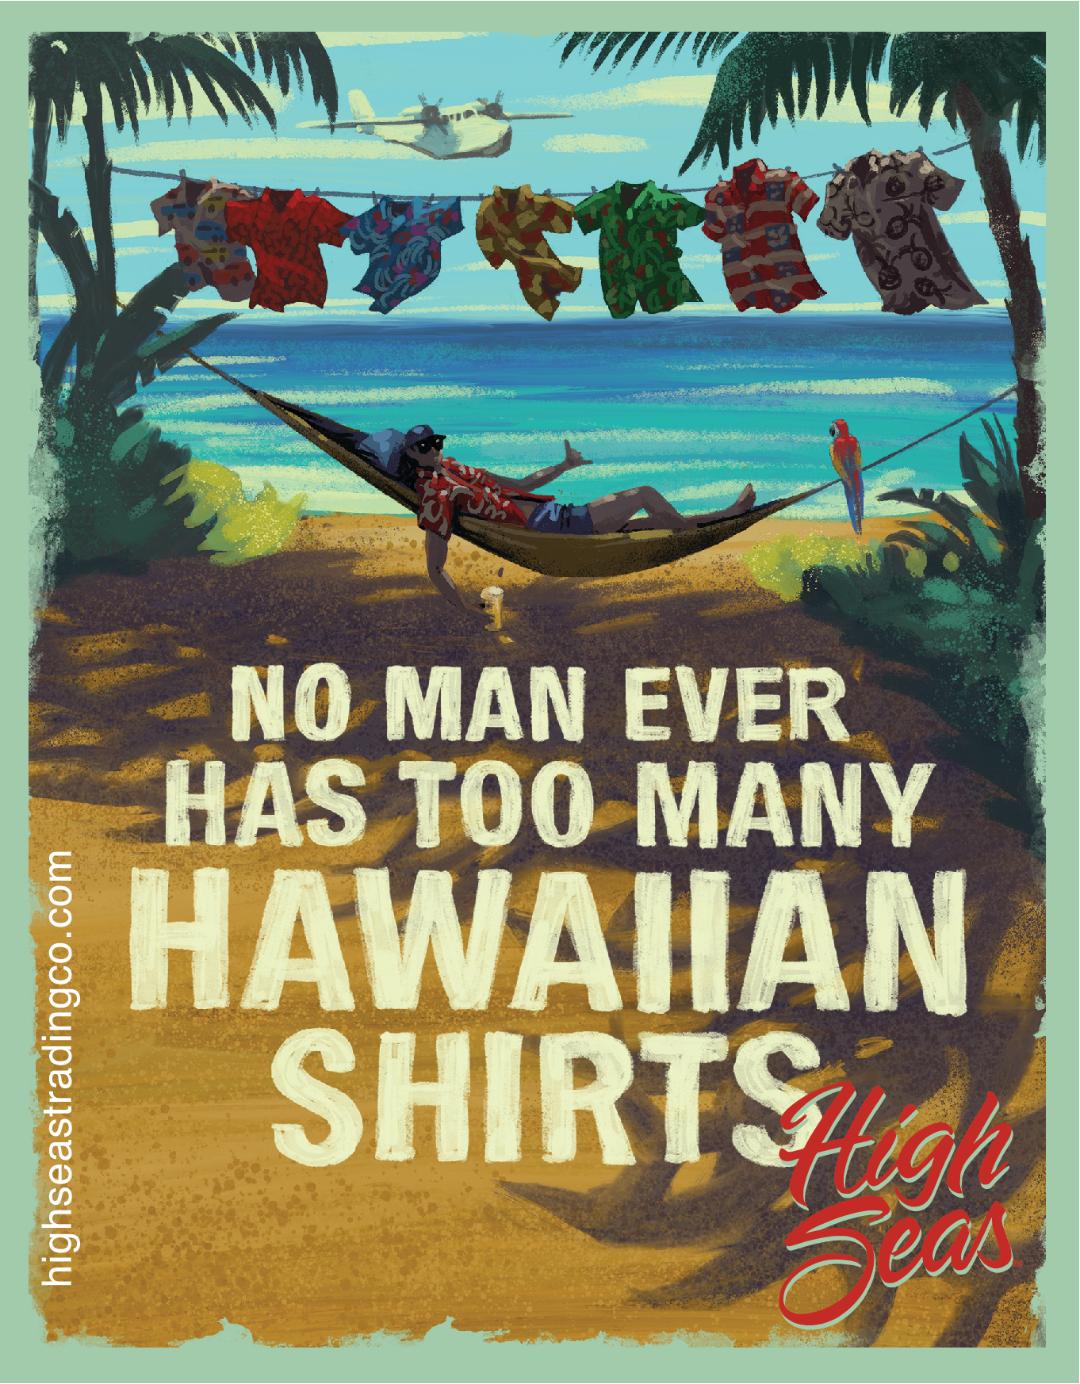 Hawaiian Shirts and USA Made Clothing by High Seas Trading Co